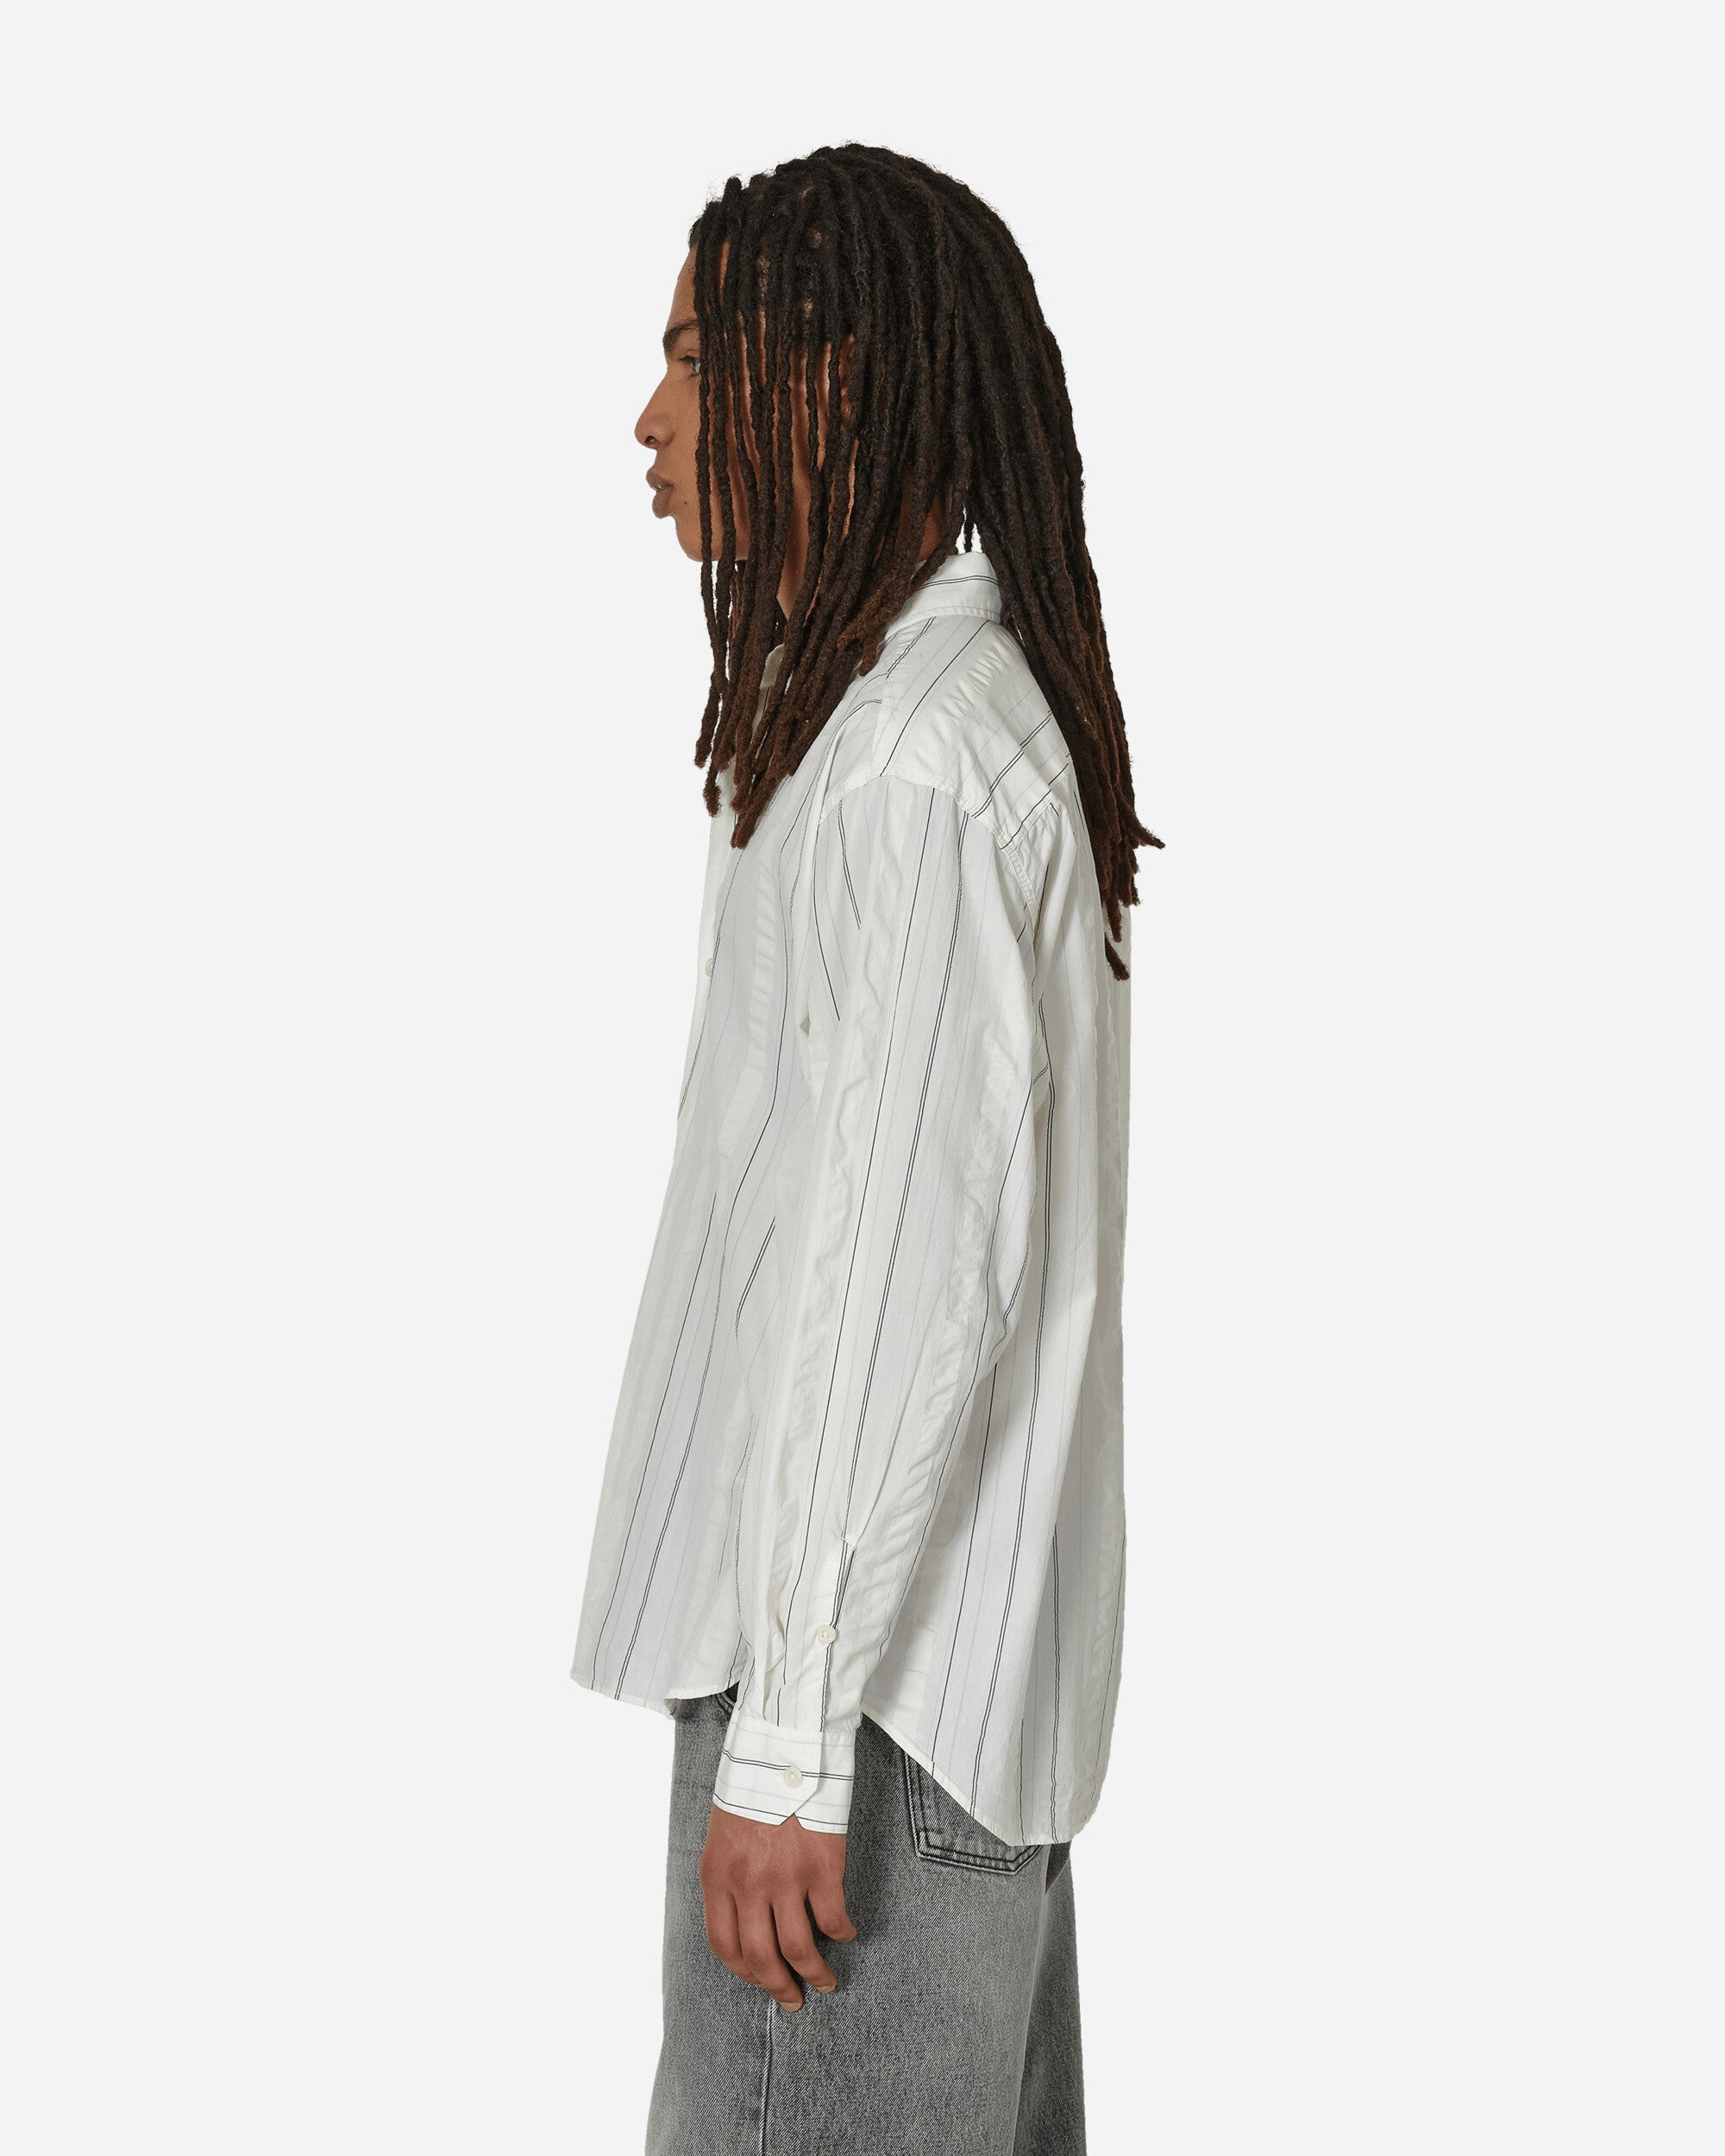 mfpen Generous Shirt White Stripe Shirts Longsleeve Shirt M124-16  1